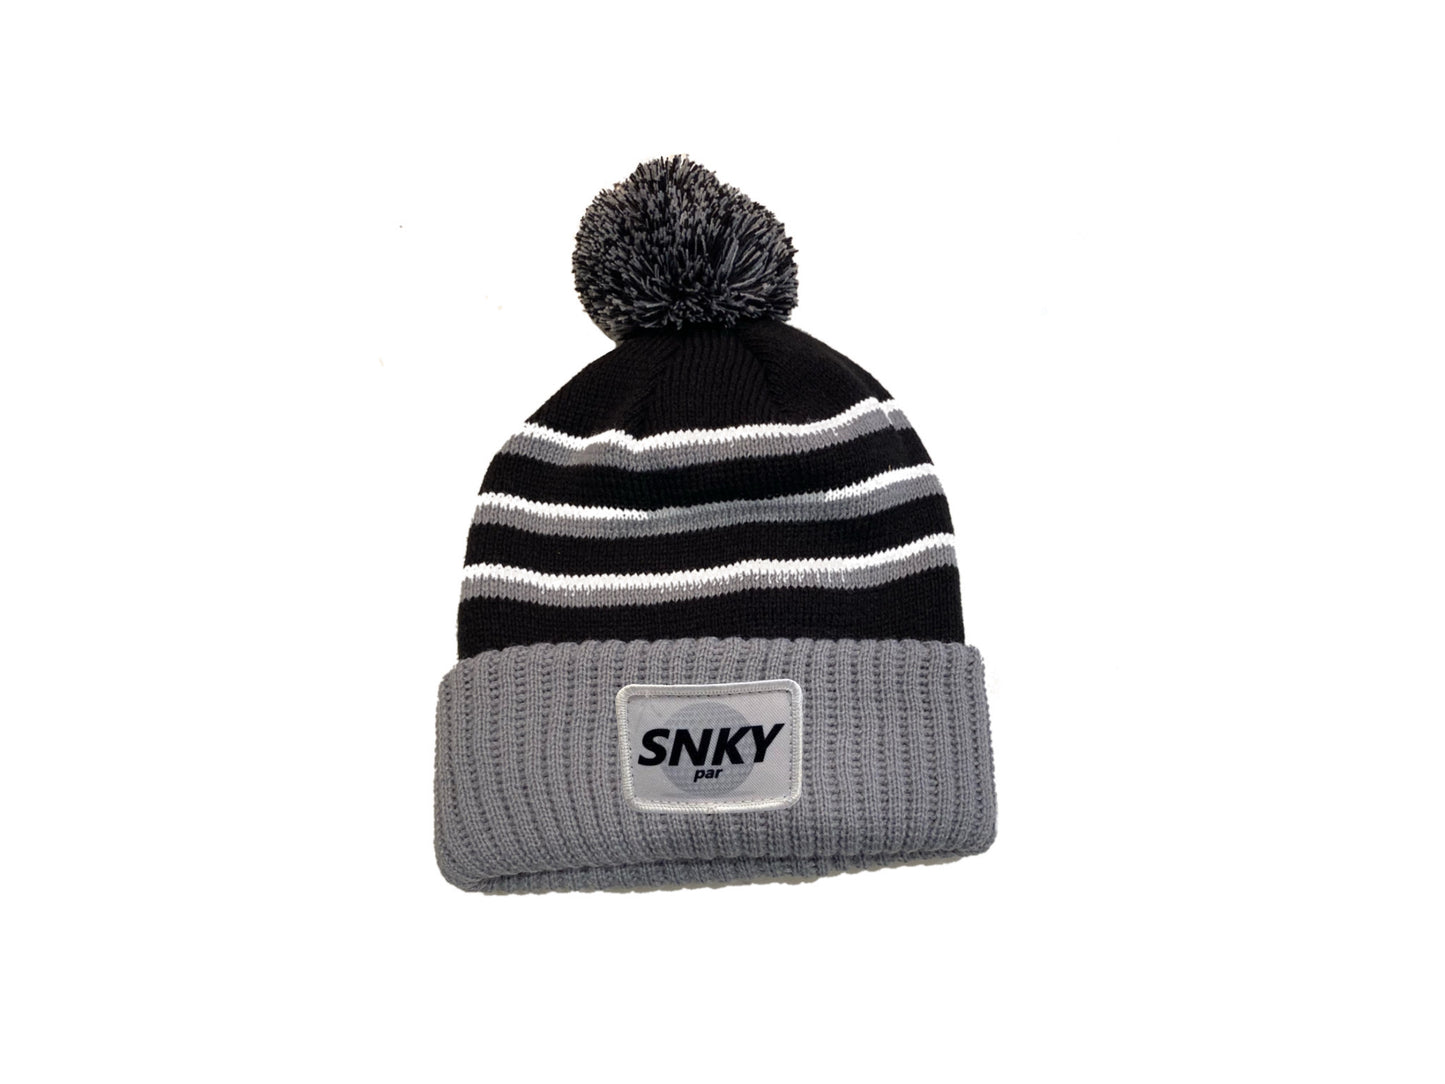 Sneaky Par "SNKY" Ball Top Hat